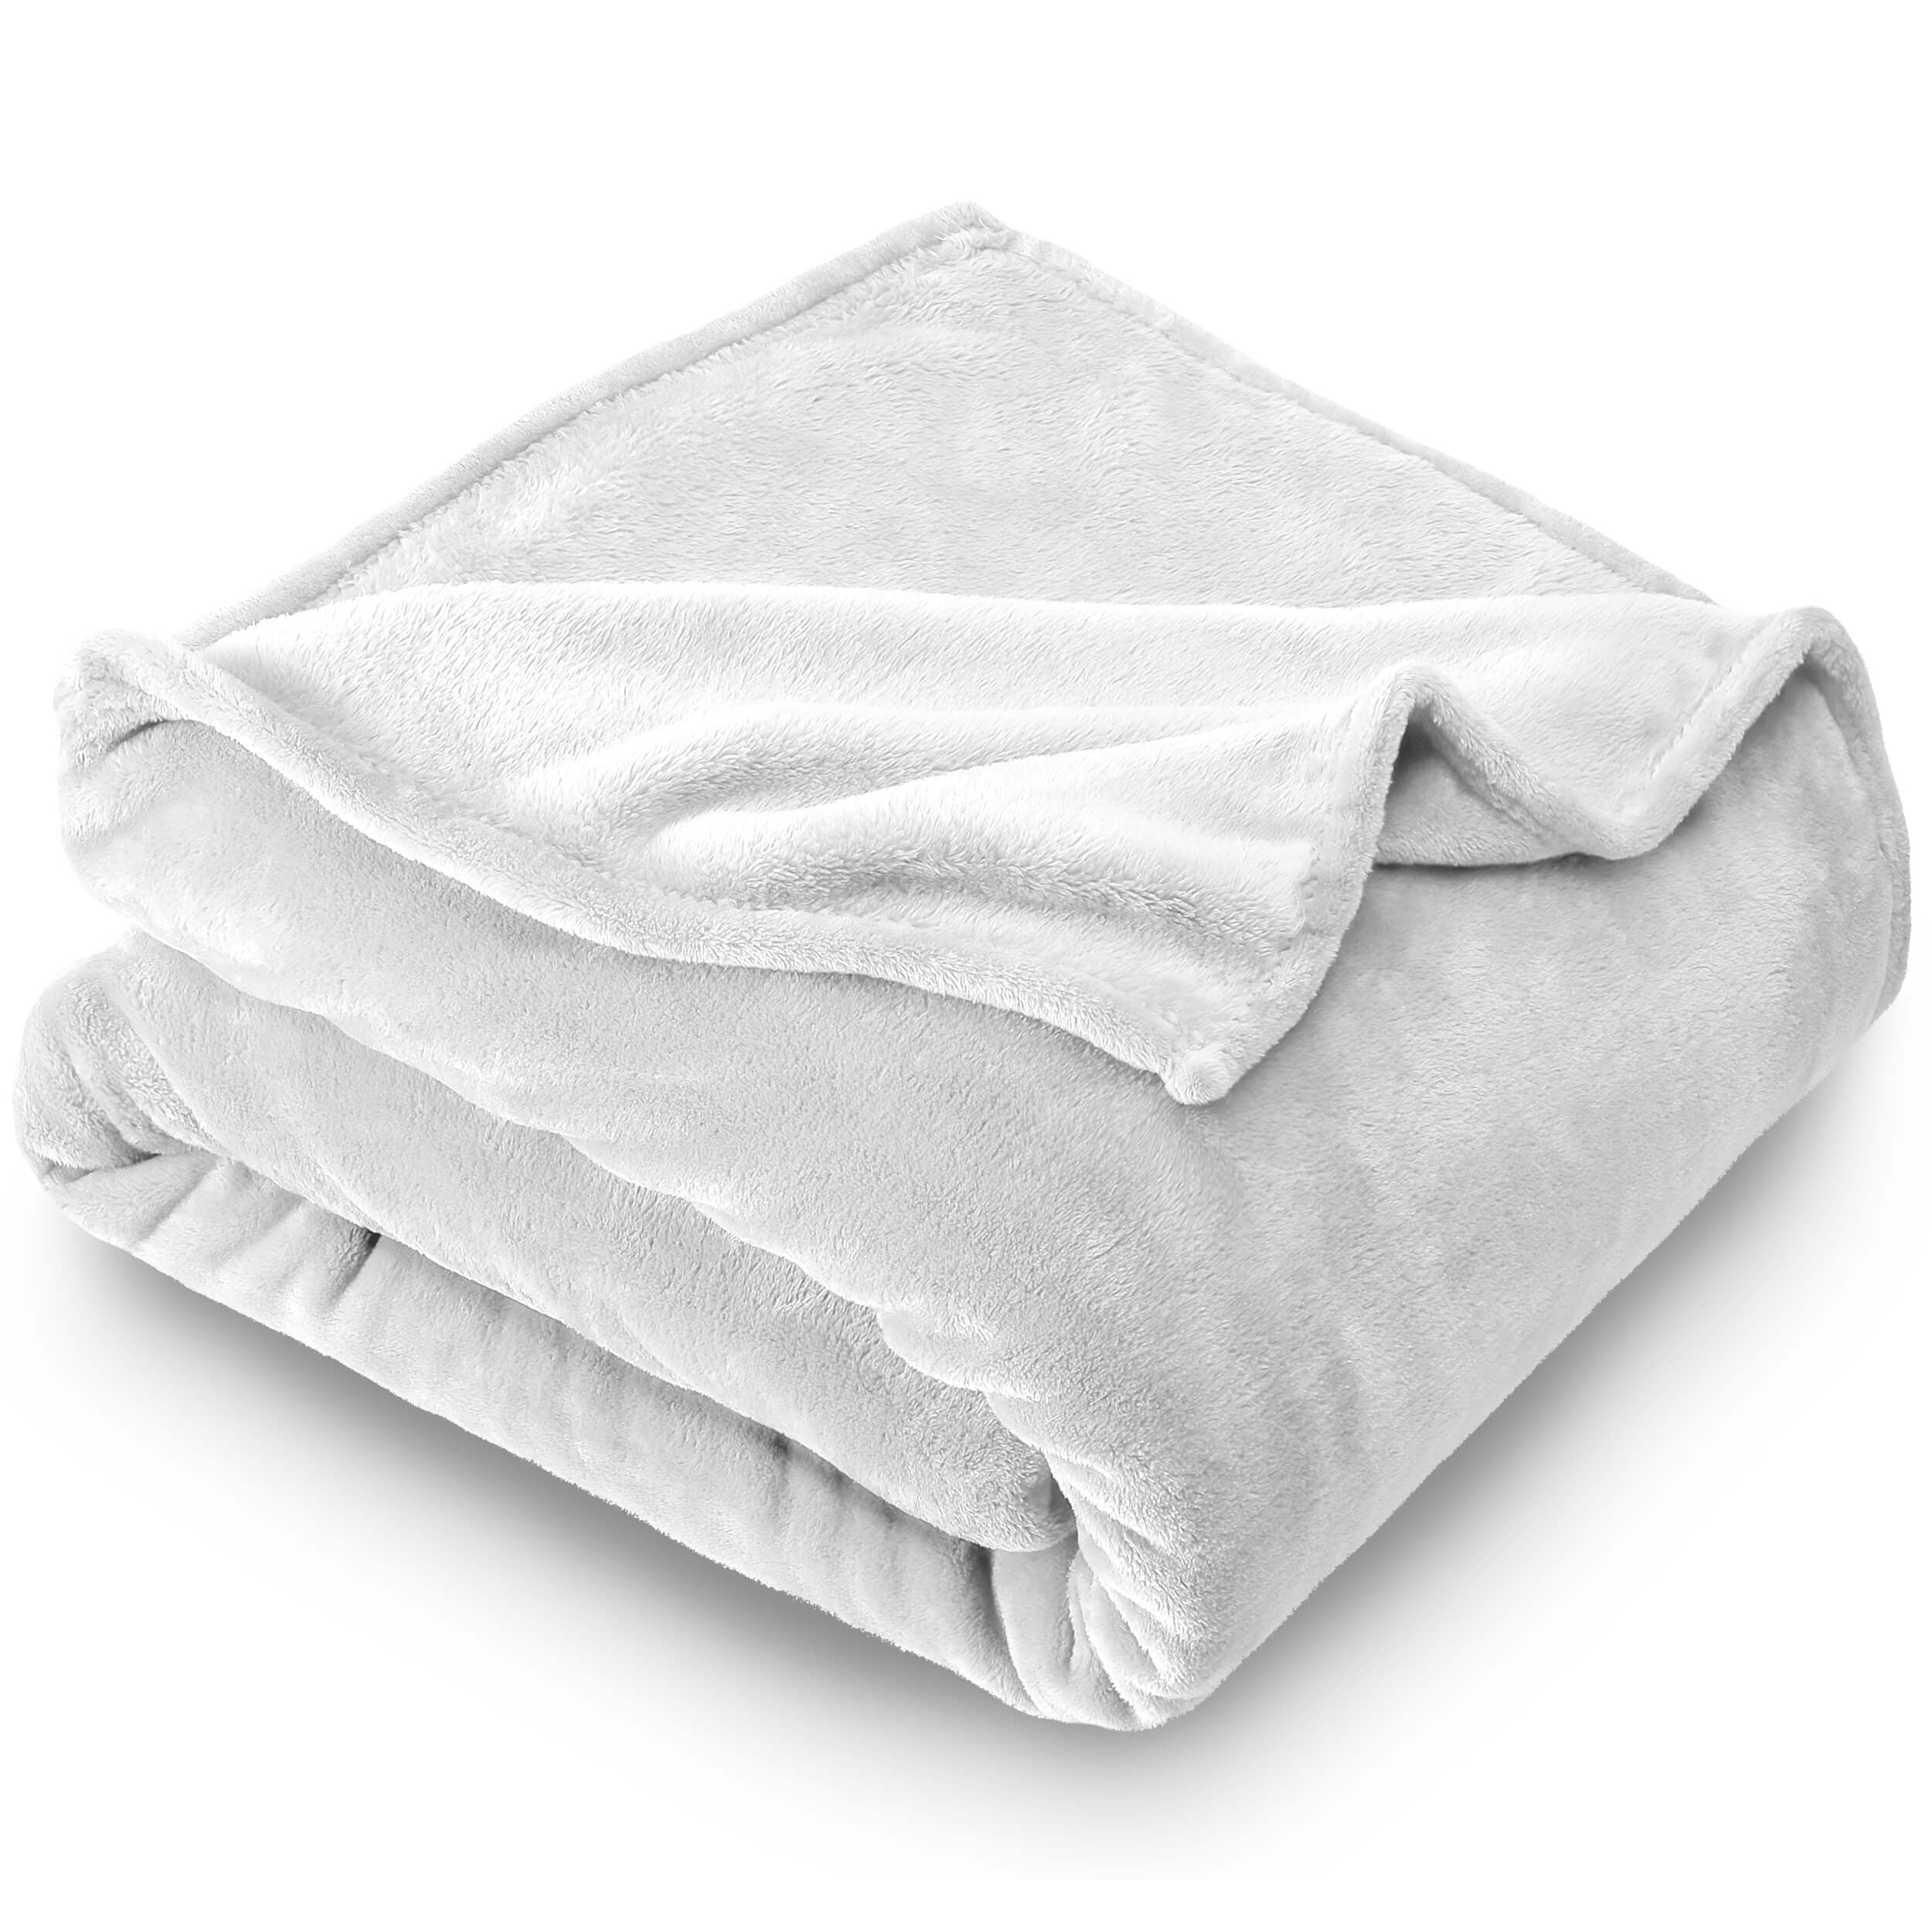 Twin/Twin XL, Light Pink Cozy Lightweight Soft Blanket Bare Home Microplush Fleece Blanket Ultra-Soft Twin/Twin Extra Long Blanket Luxurious Fuzzy Warm Blanket 